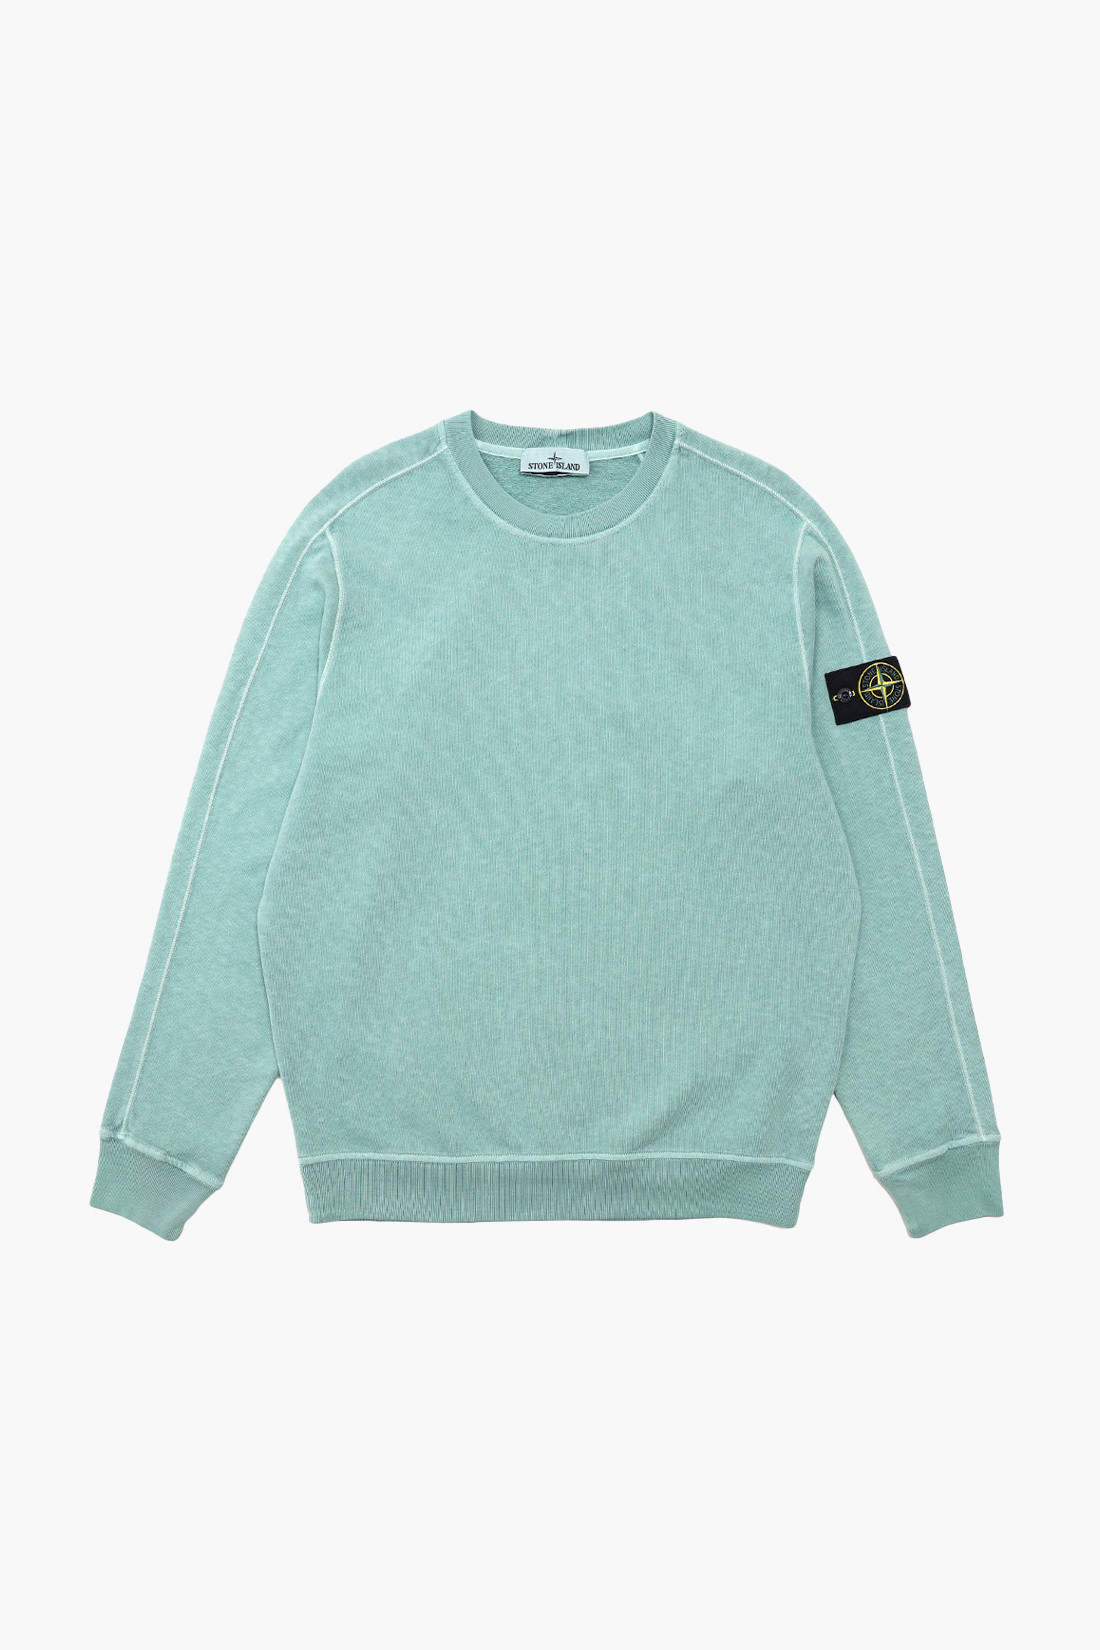 66060 crewneck sweater v00152 Verde chiaro